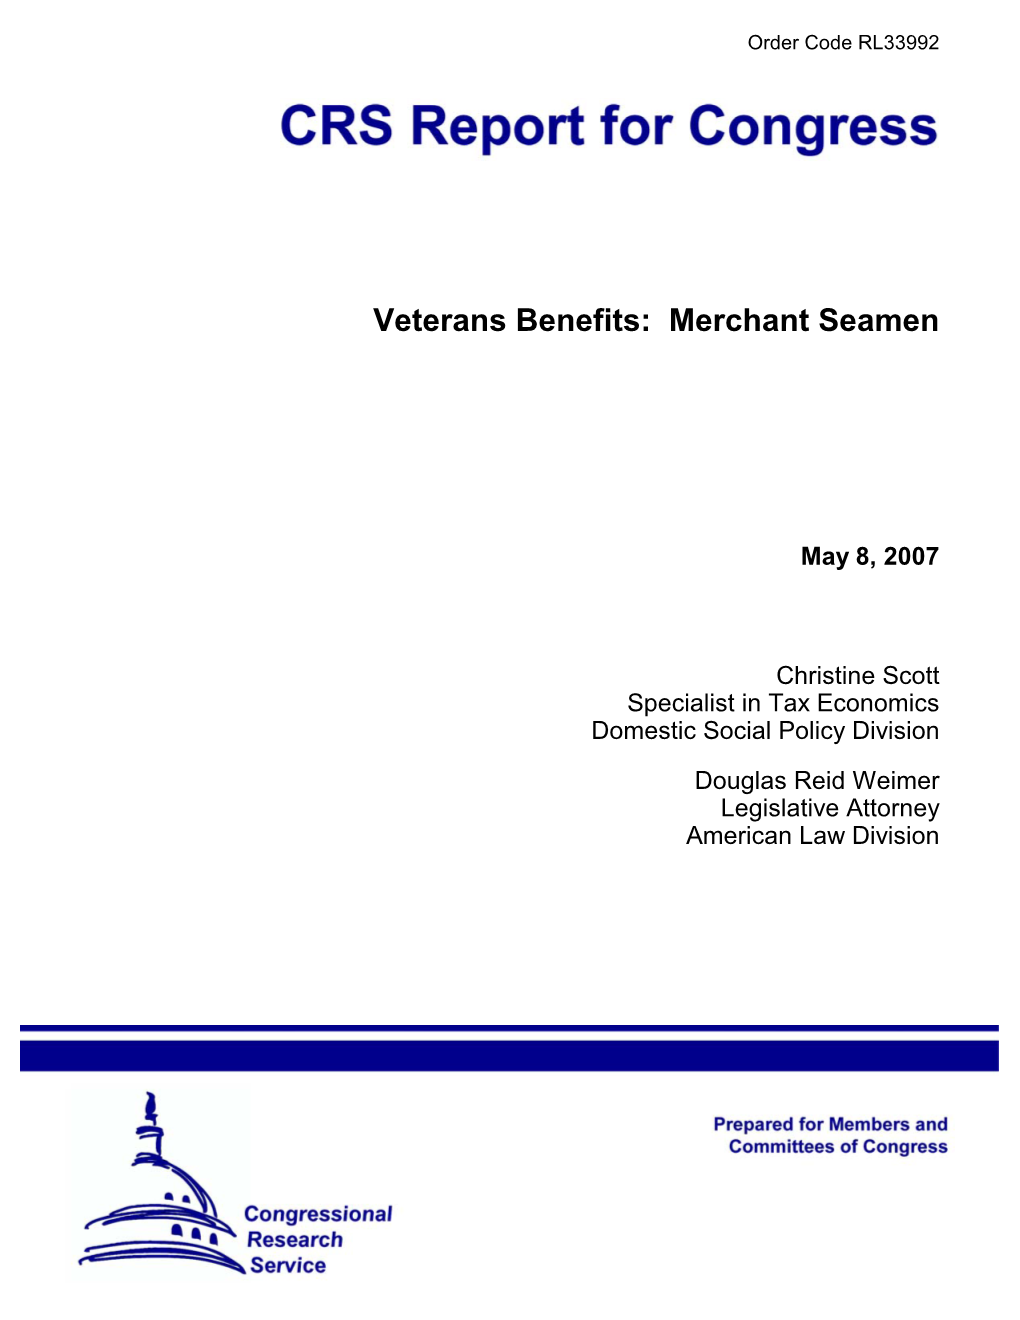 Veterans Benefits: Merchant Seamen